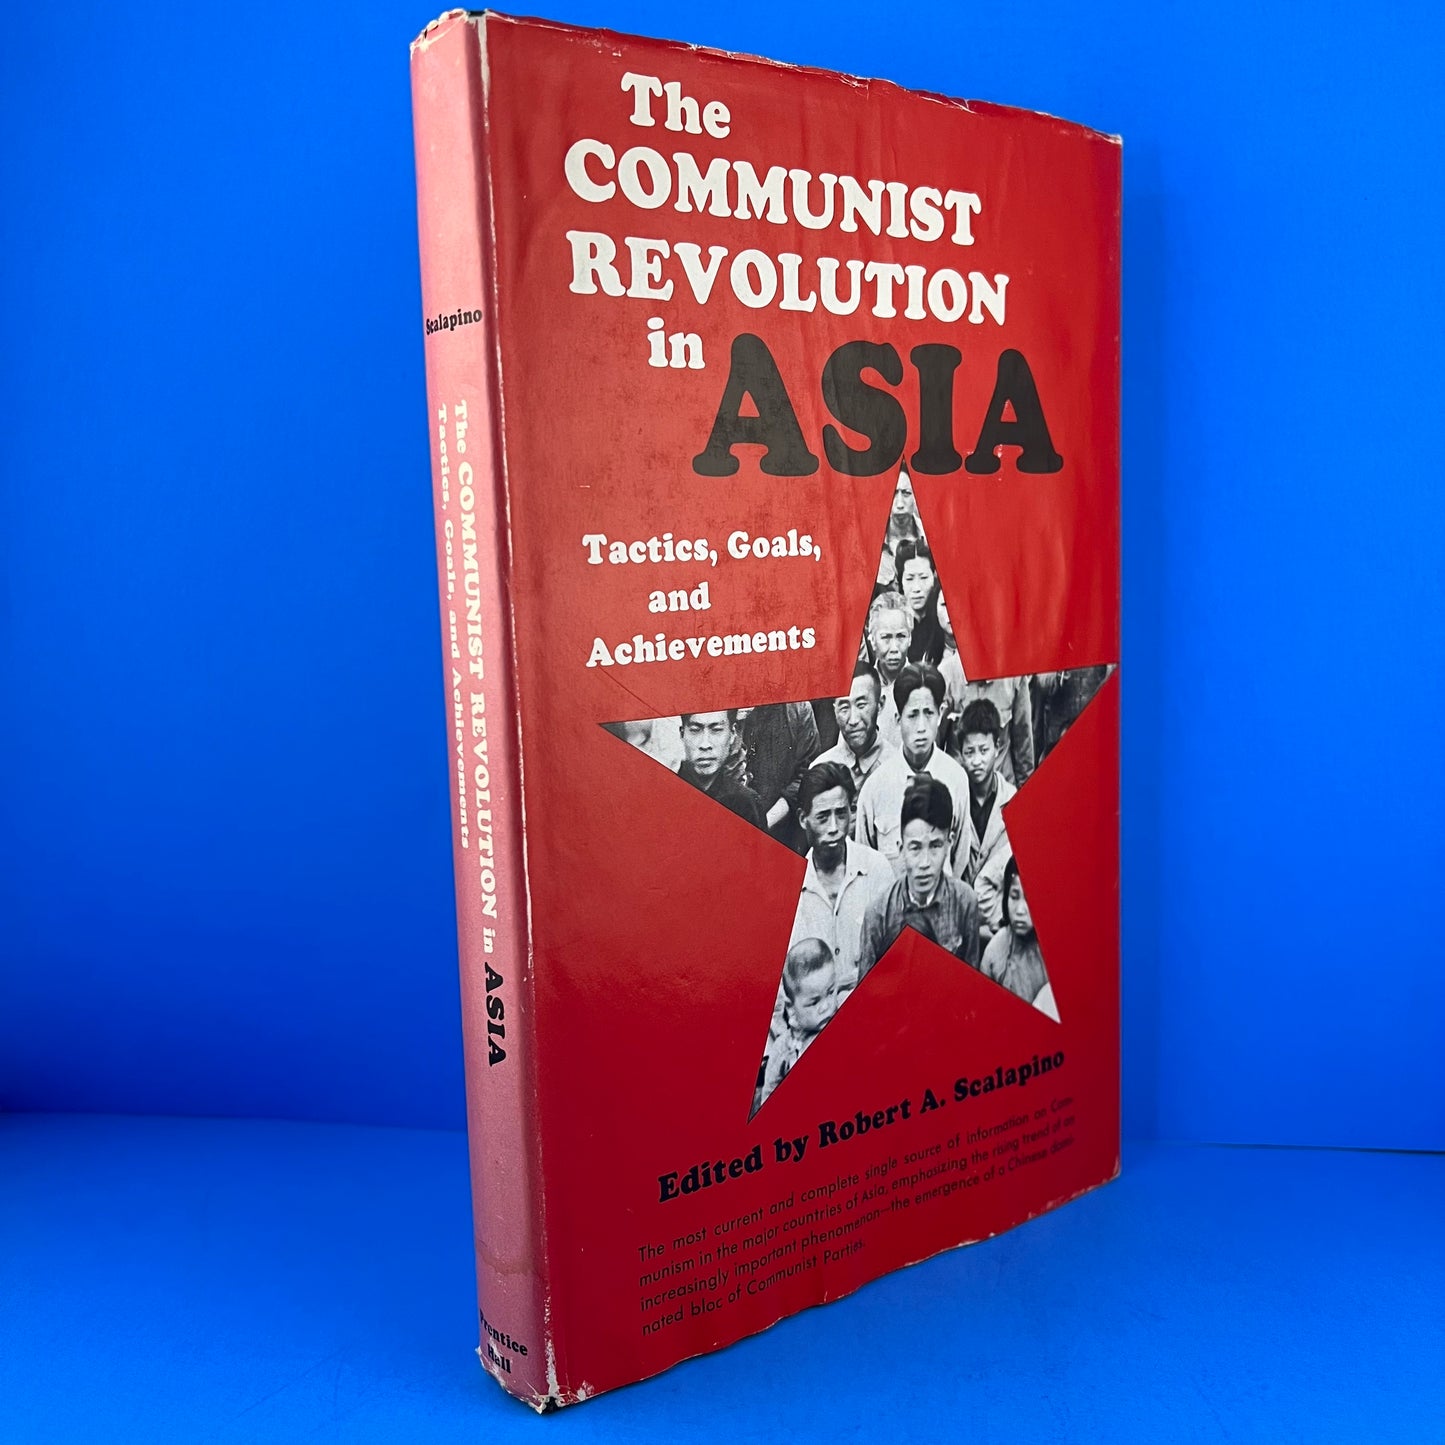 The Communist Revolution in Asia